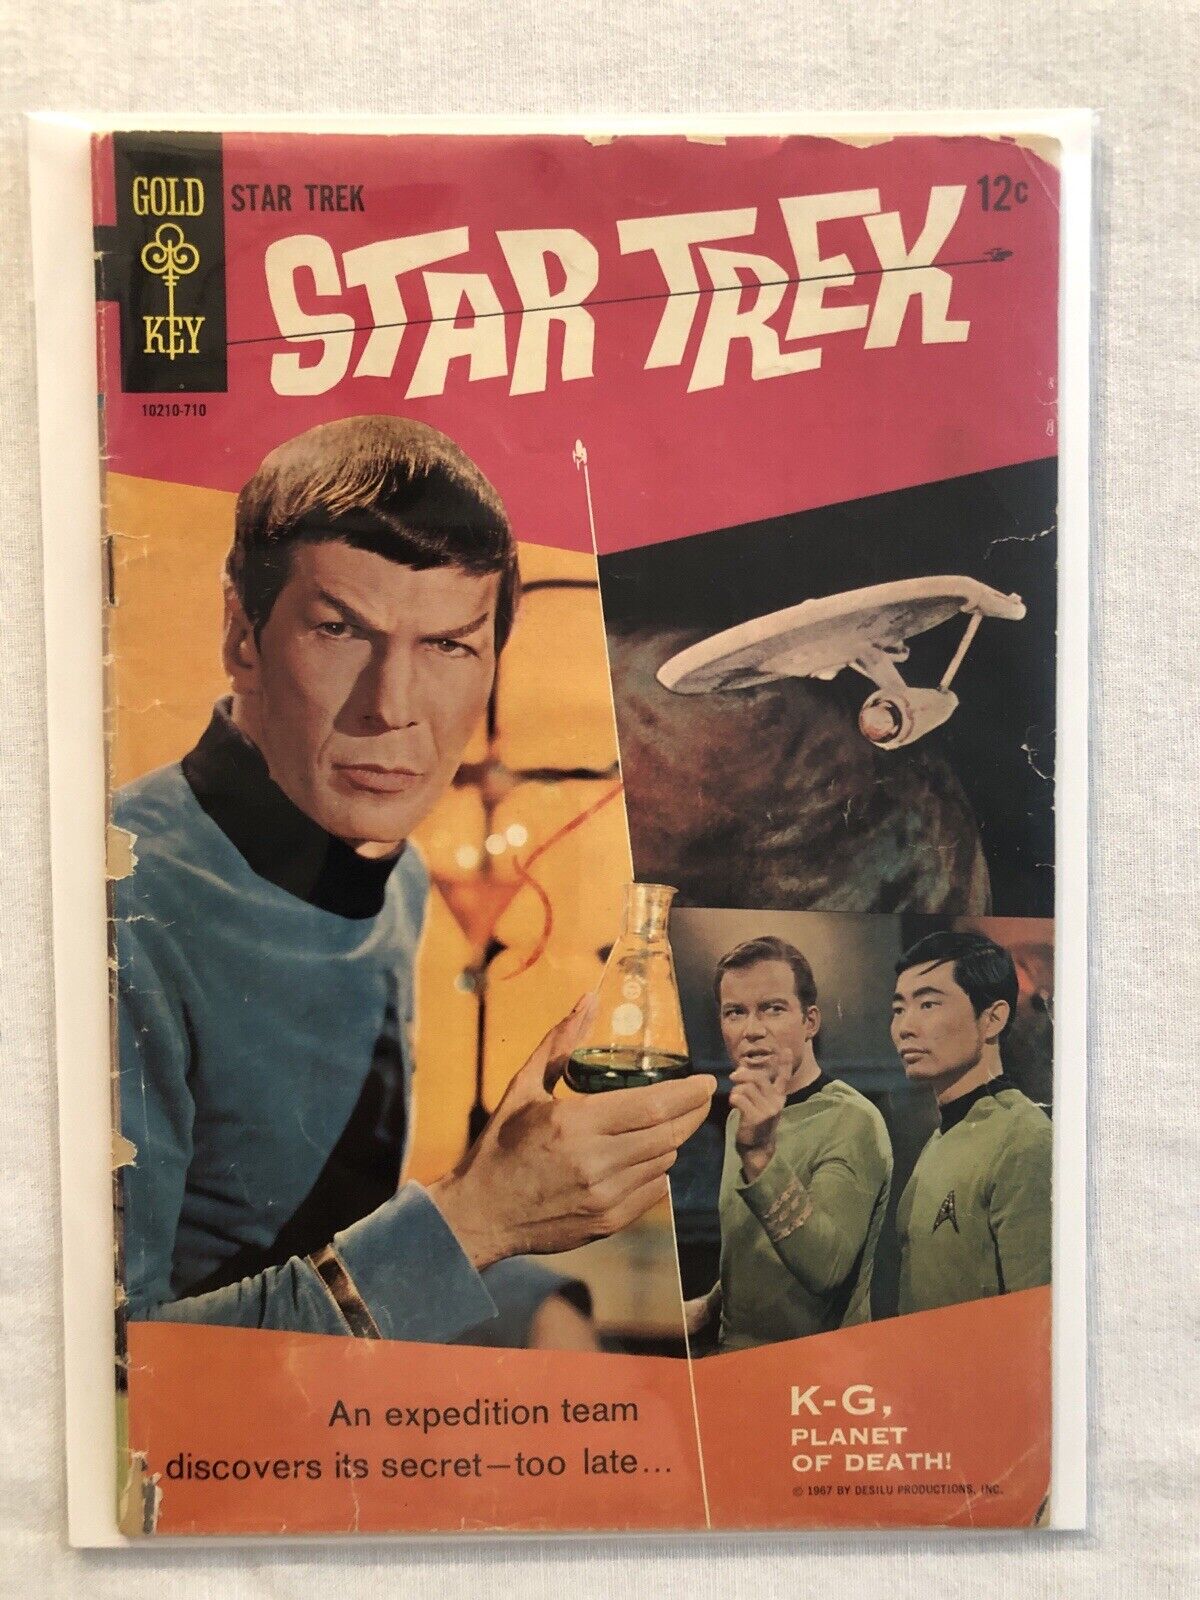 Star Trek # 1  - 1967 - Gold Key - Silver Age Vintage Comic